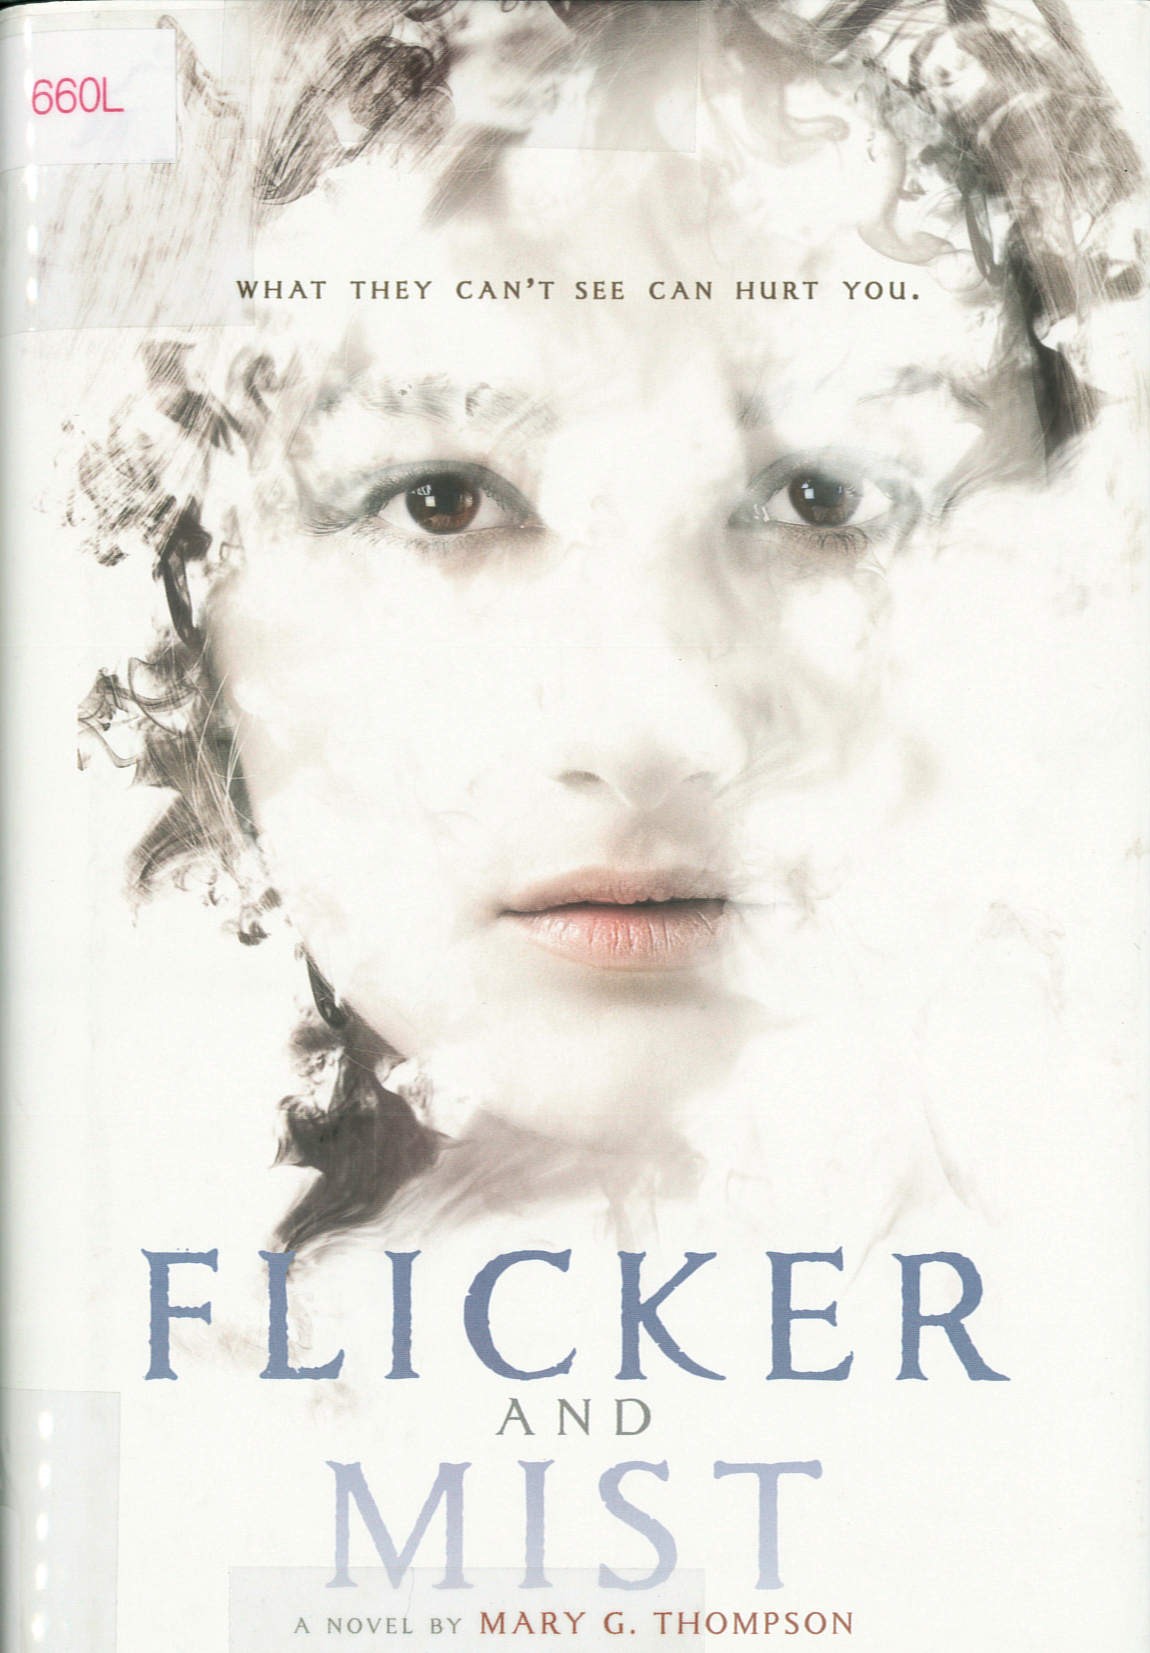 Flicker and mist /